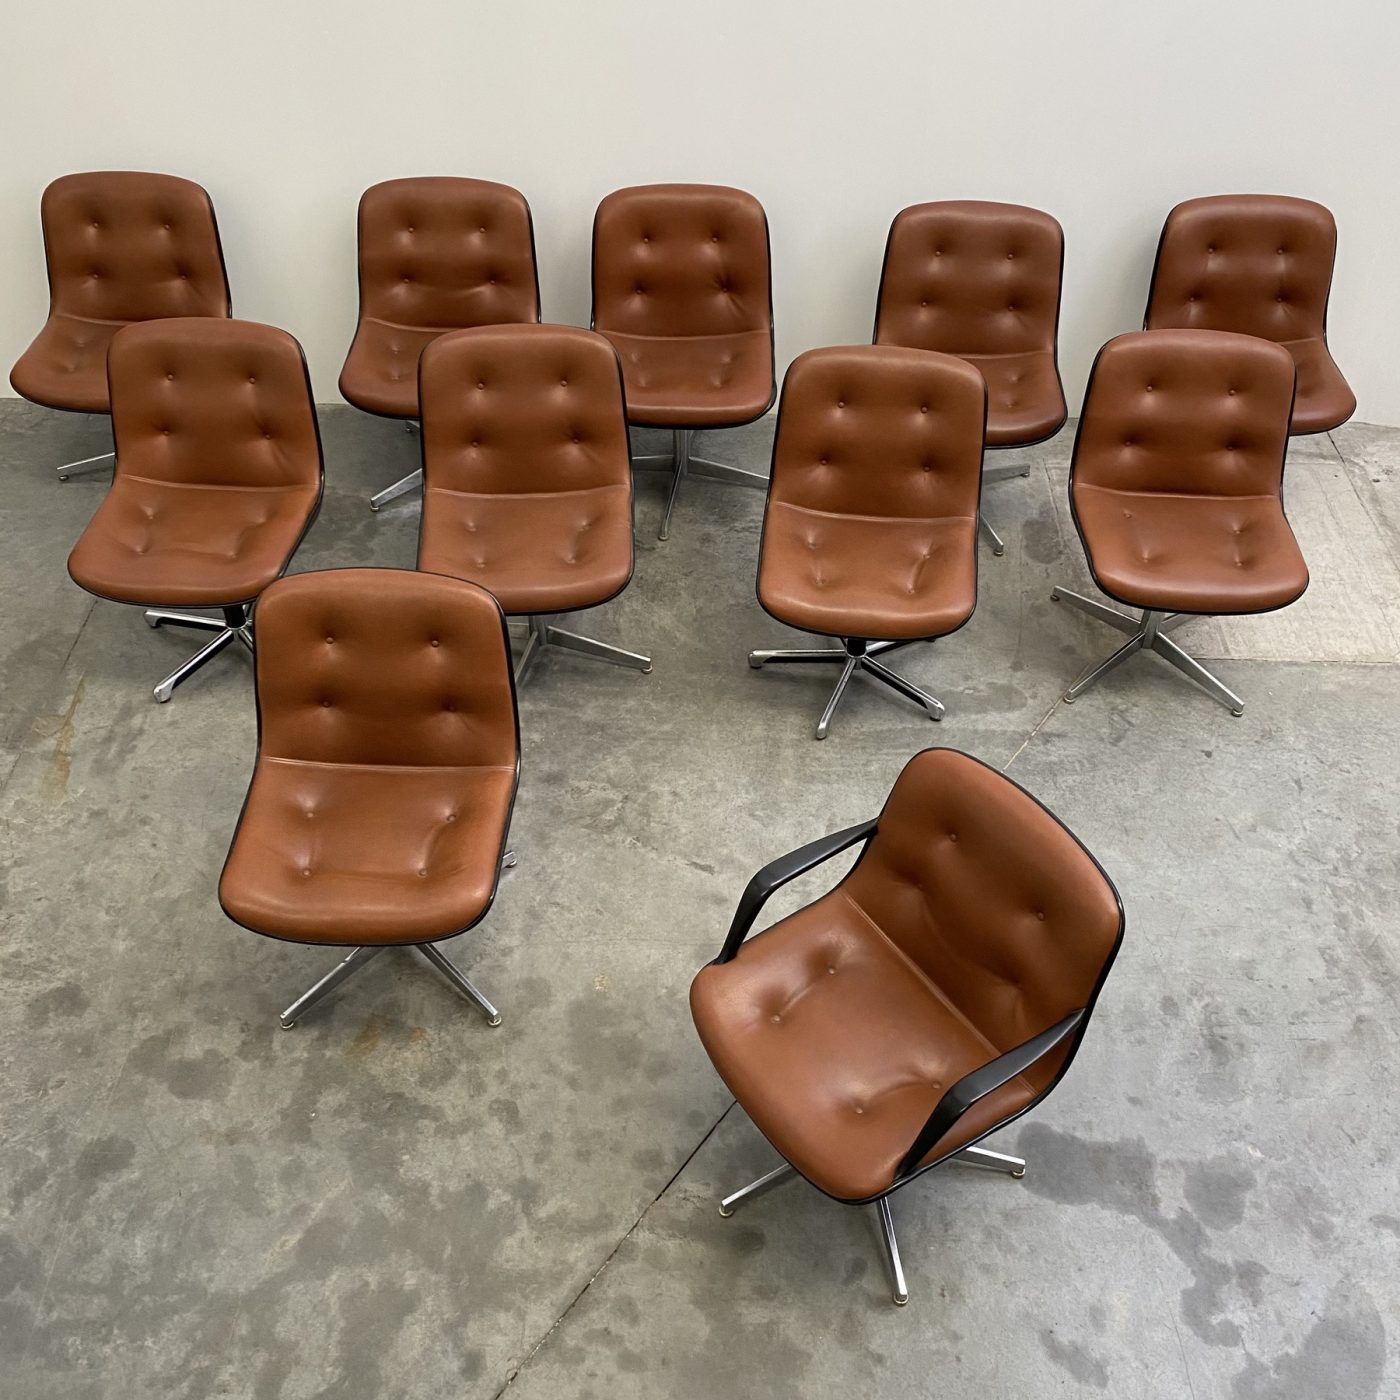 objet-vagabond-vintage-chairs0016